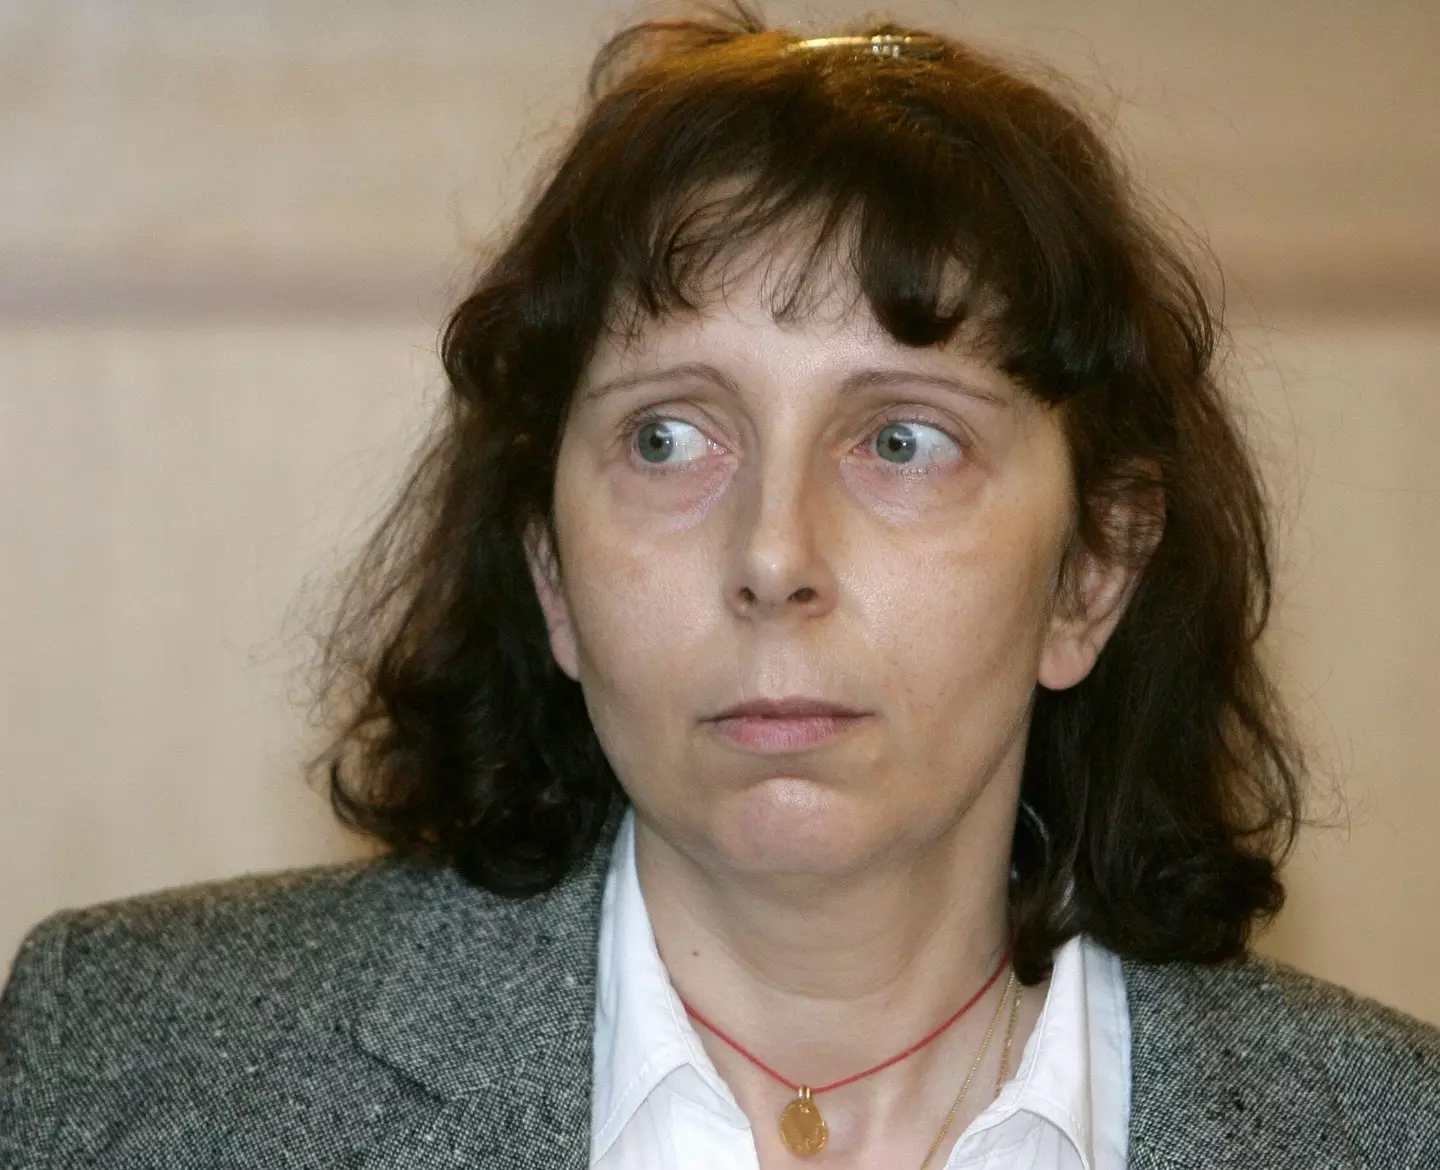 Geneviève Lhermitte was sentenced in December 2008.